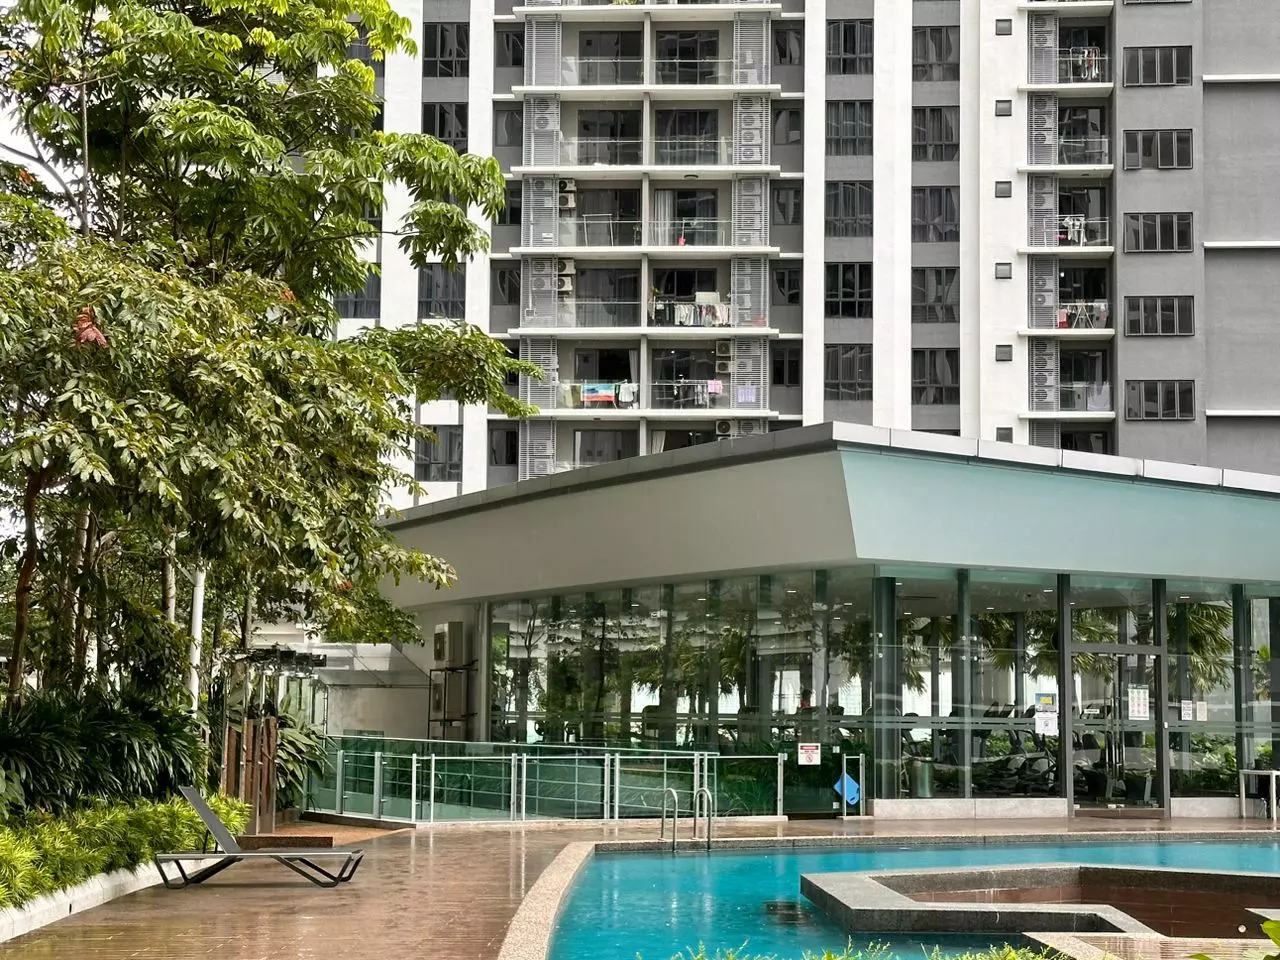 Rumah Lelong United Point Residence @ Segambut, Kuala Lumpur for Auction 2